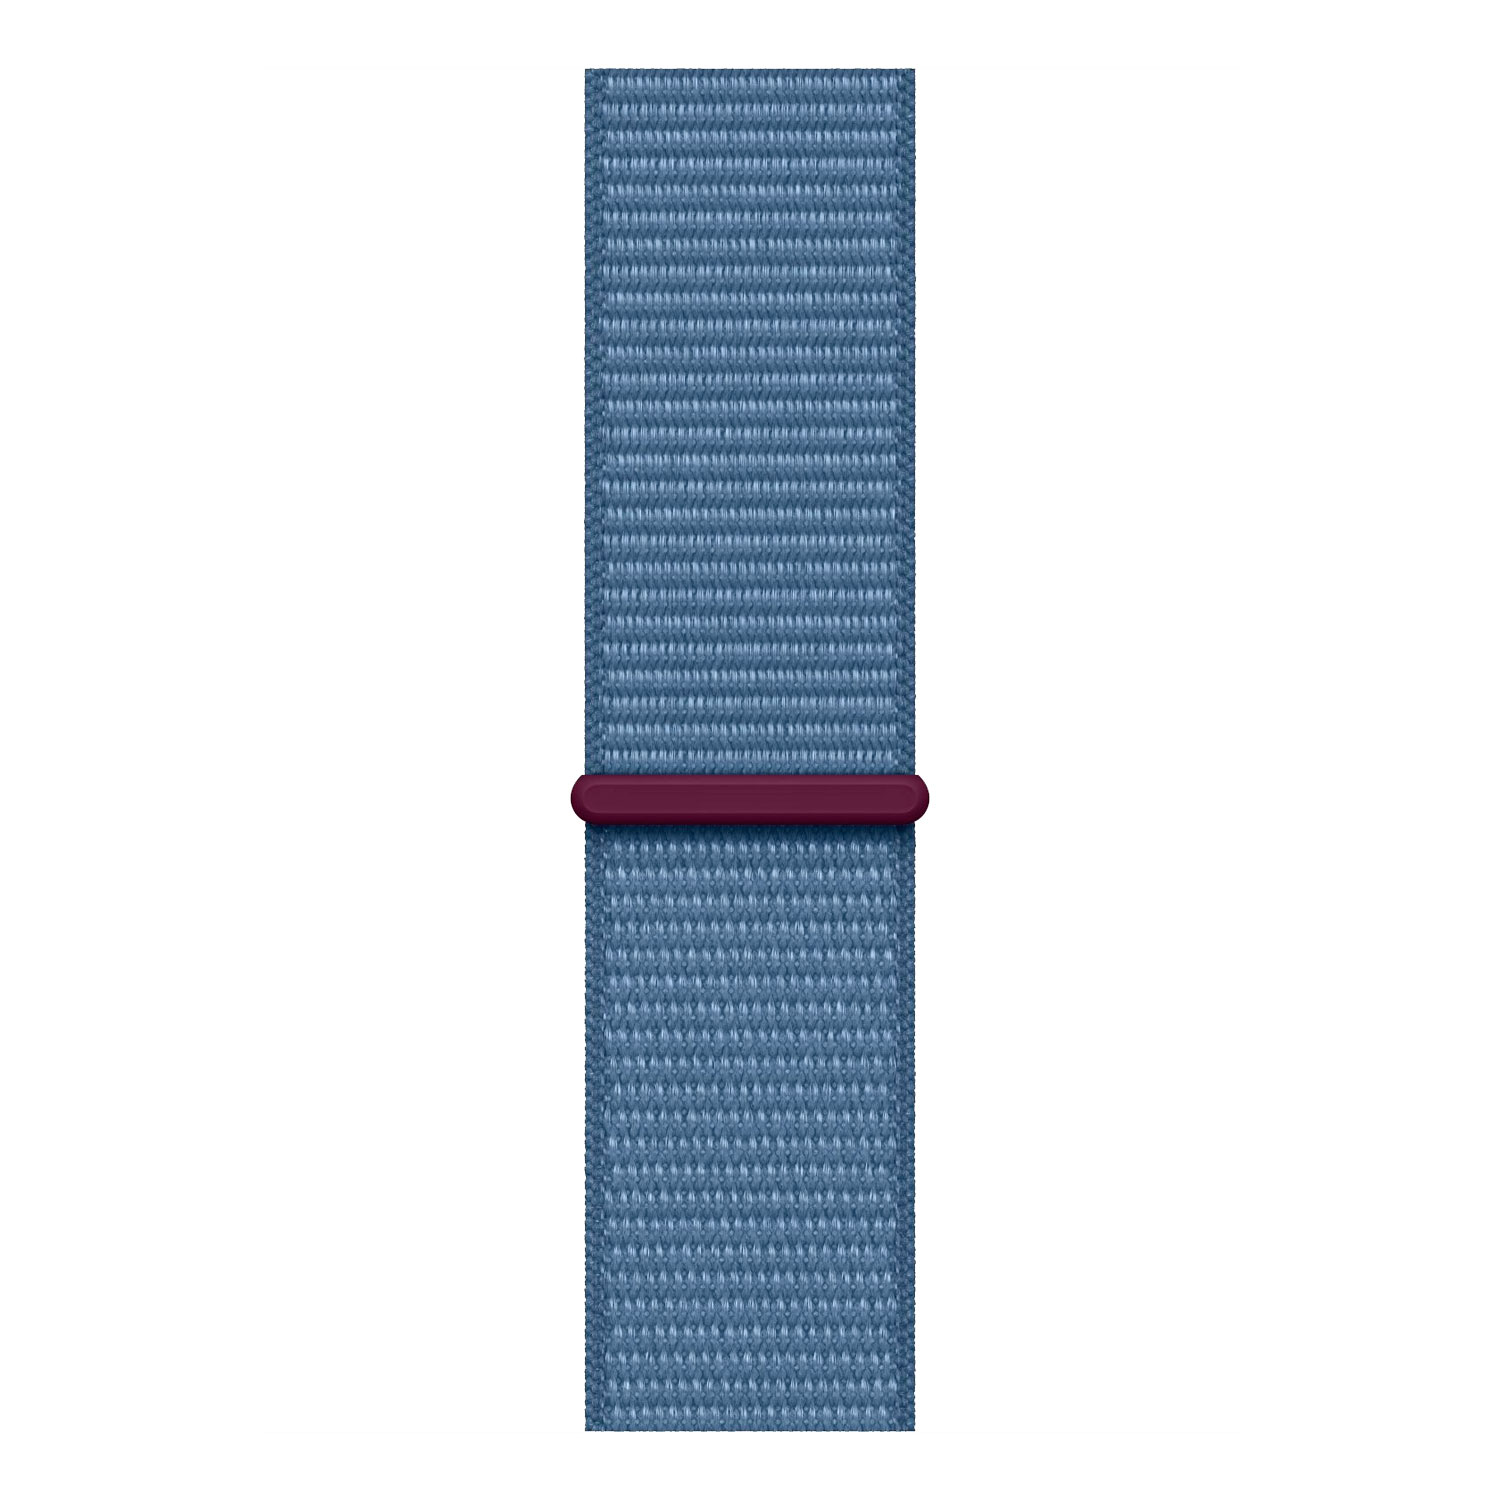 Apple Watch SE 2 MRE33LL/A Caixa Alumínio 40mm Prata - Loop Esportiva Azul